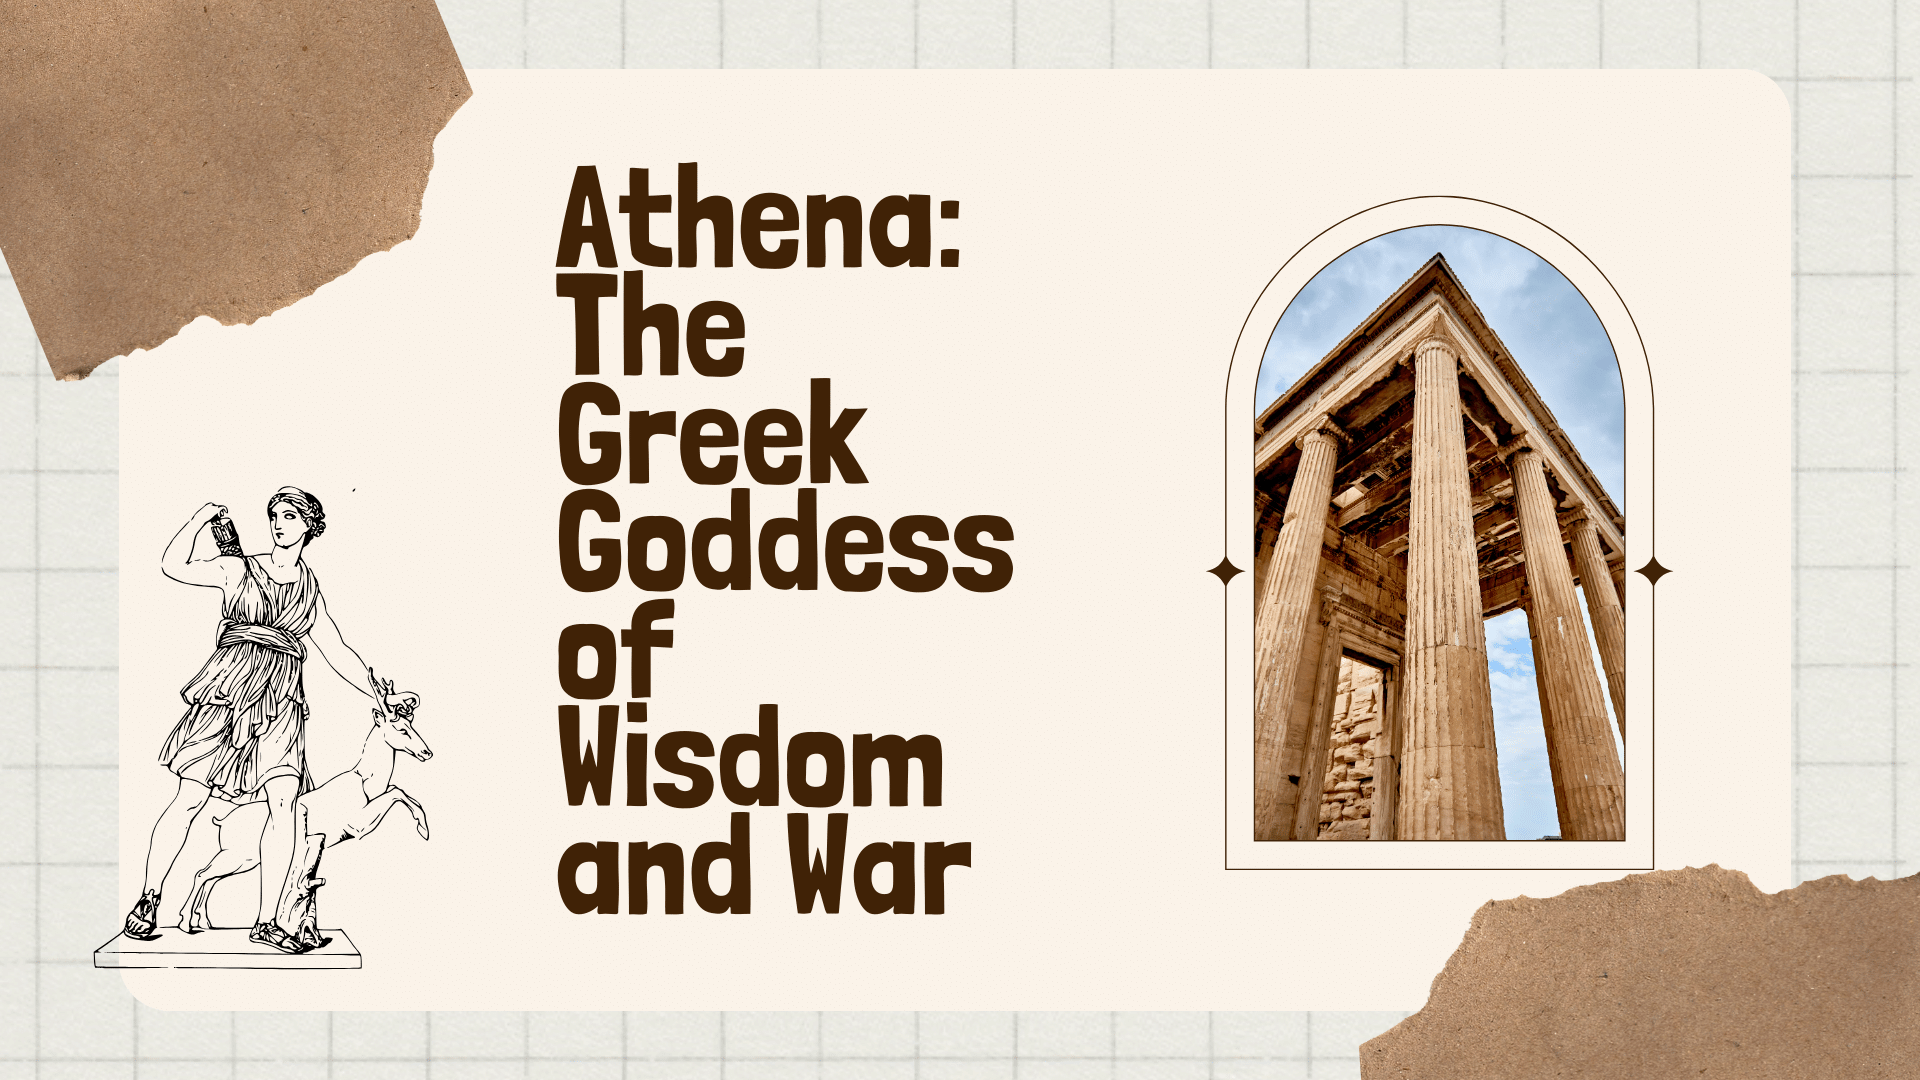 Athena: The Greek Goddess of Wisdom and War